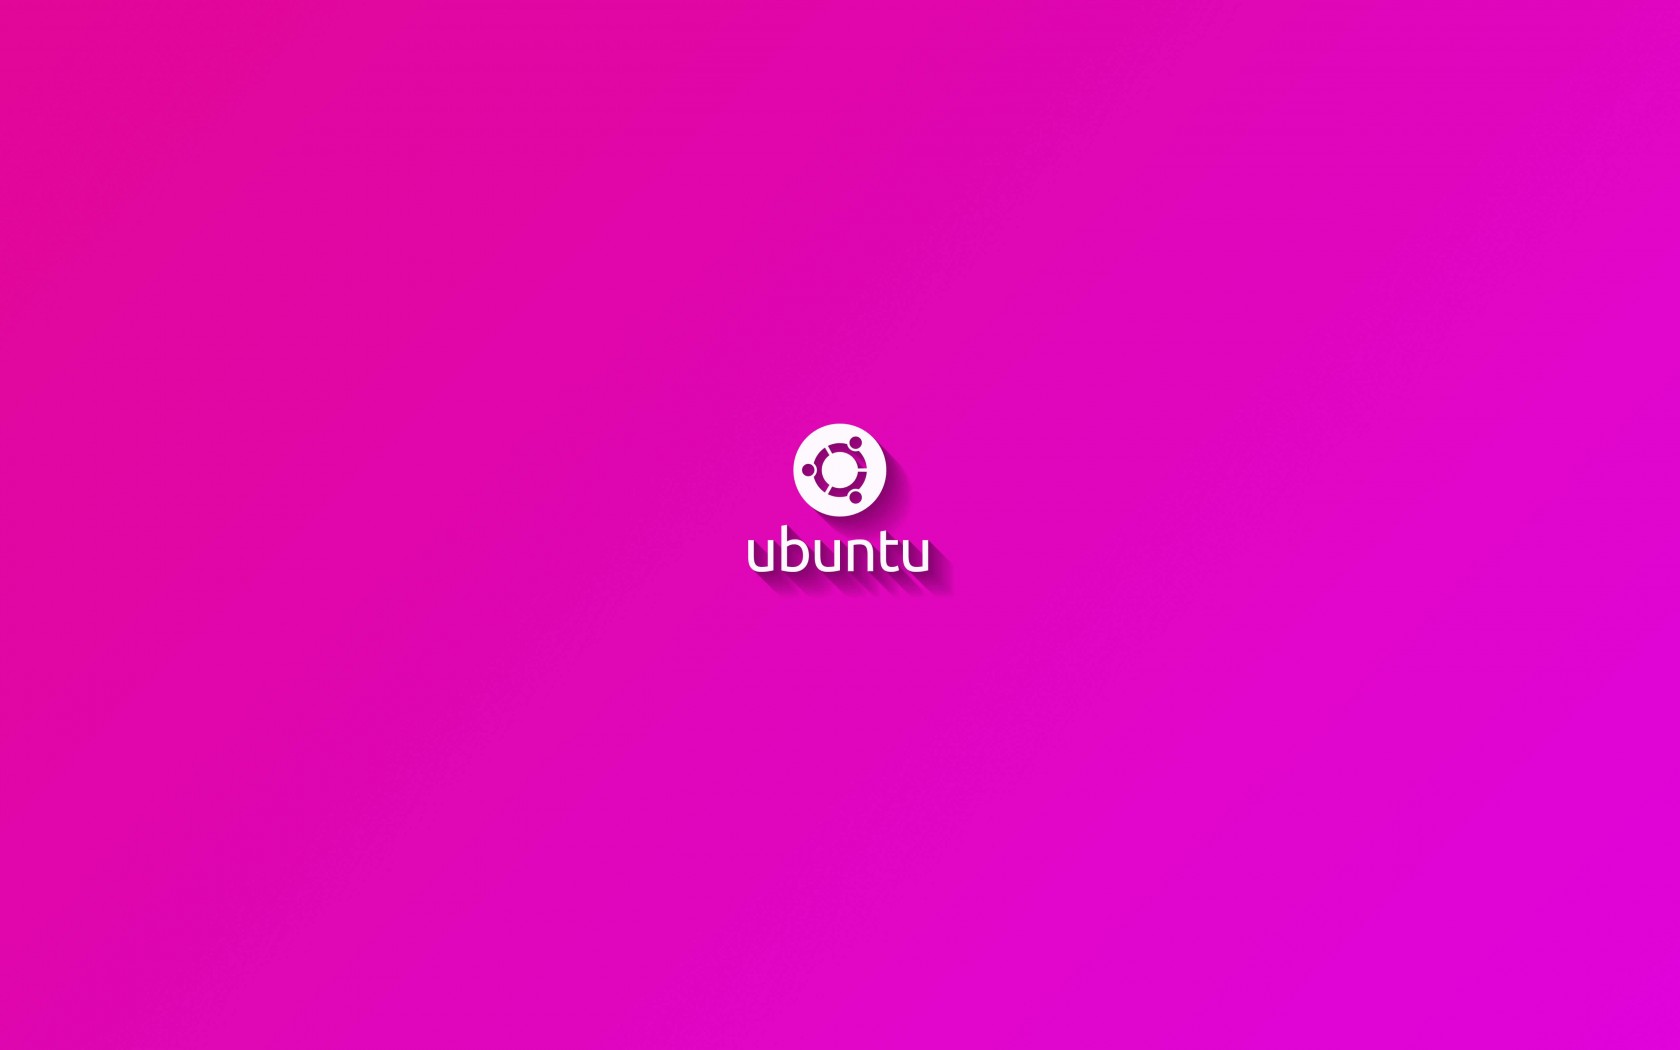 Ubuntu Flat Shadow Pink Wallpaper for Desktop 1680x1050